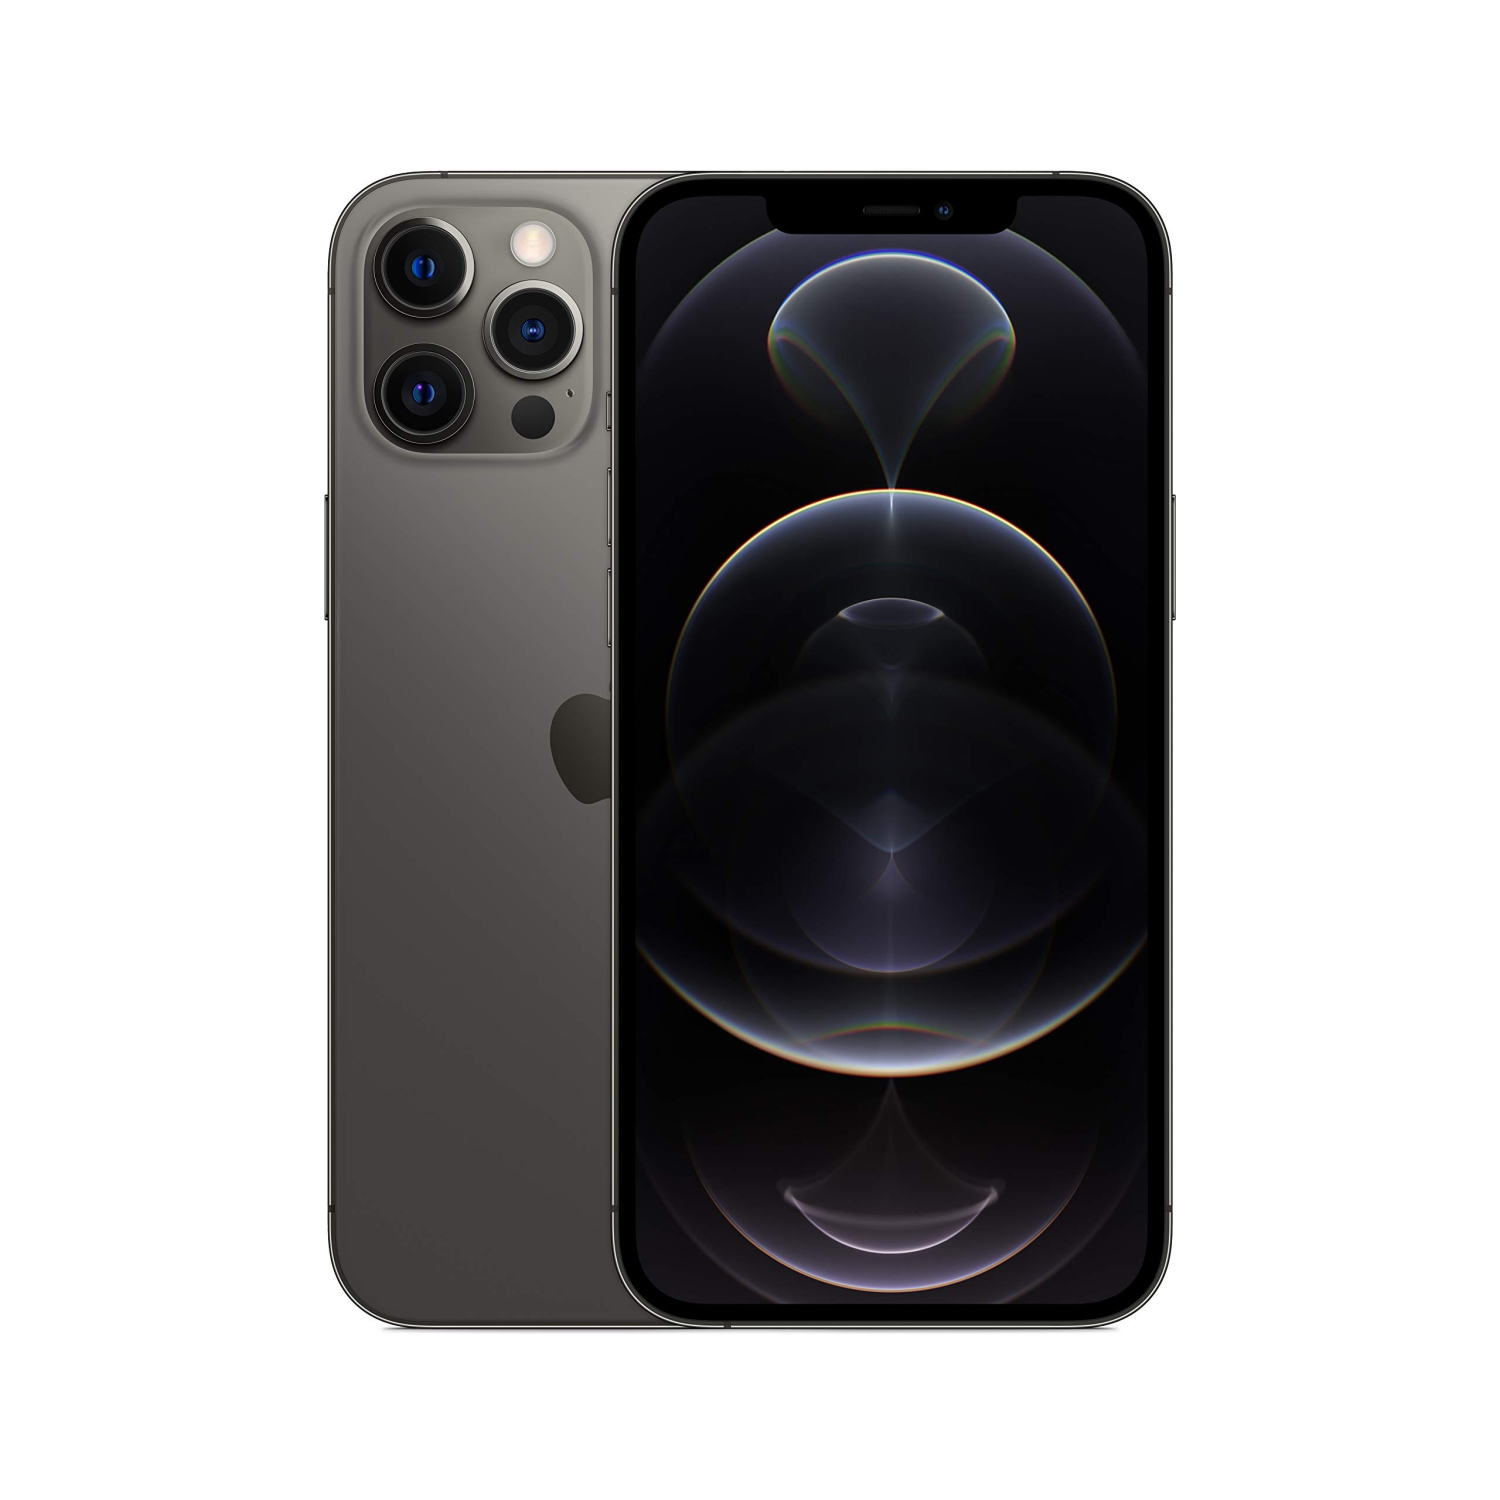 Apple Iphone 12 Pro 256GB - Graphite - Unlocked - Open Box